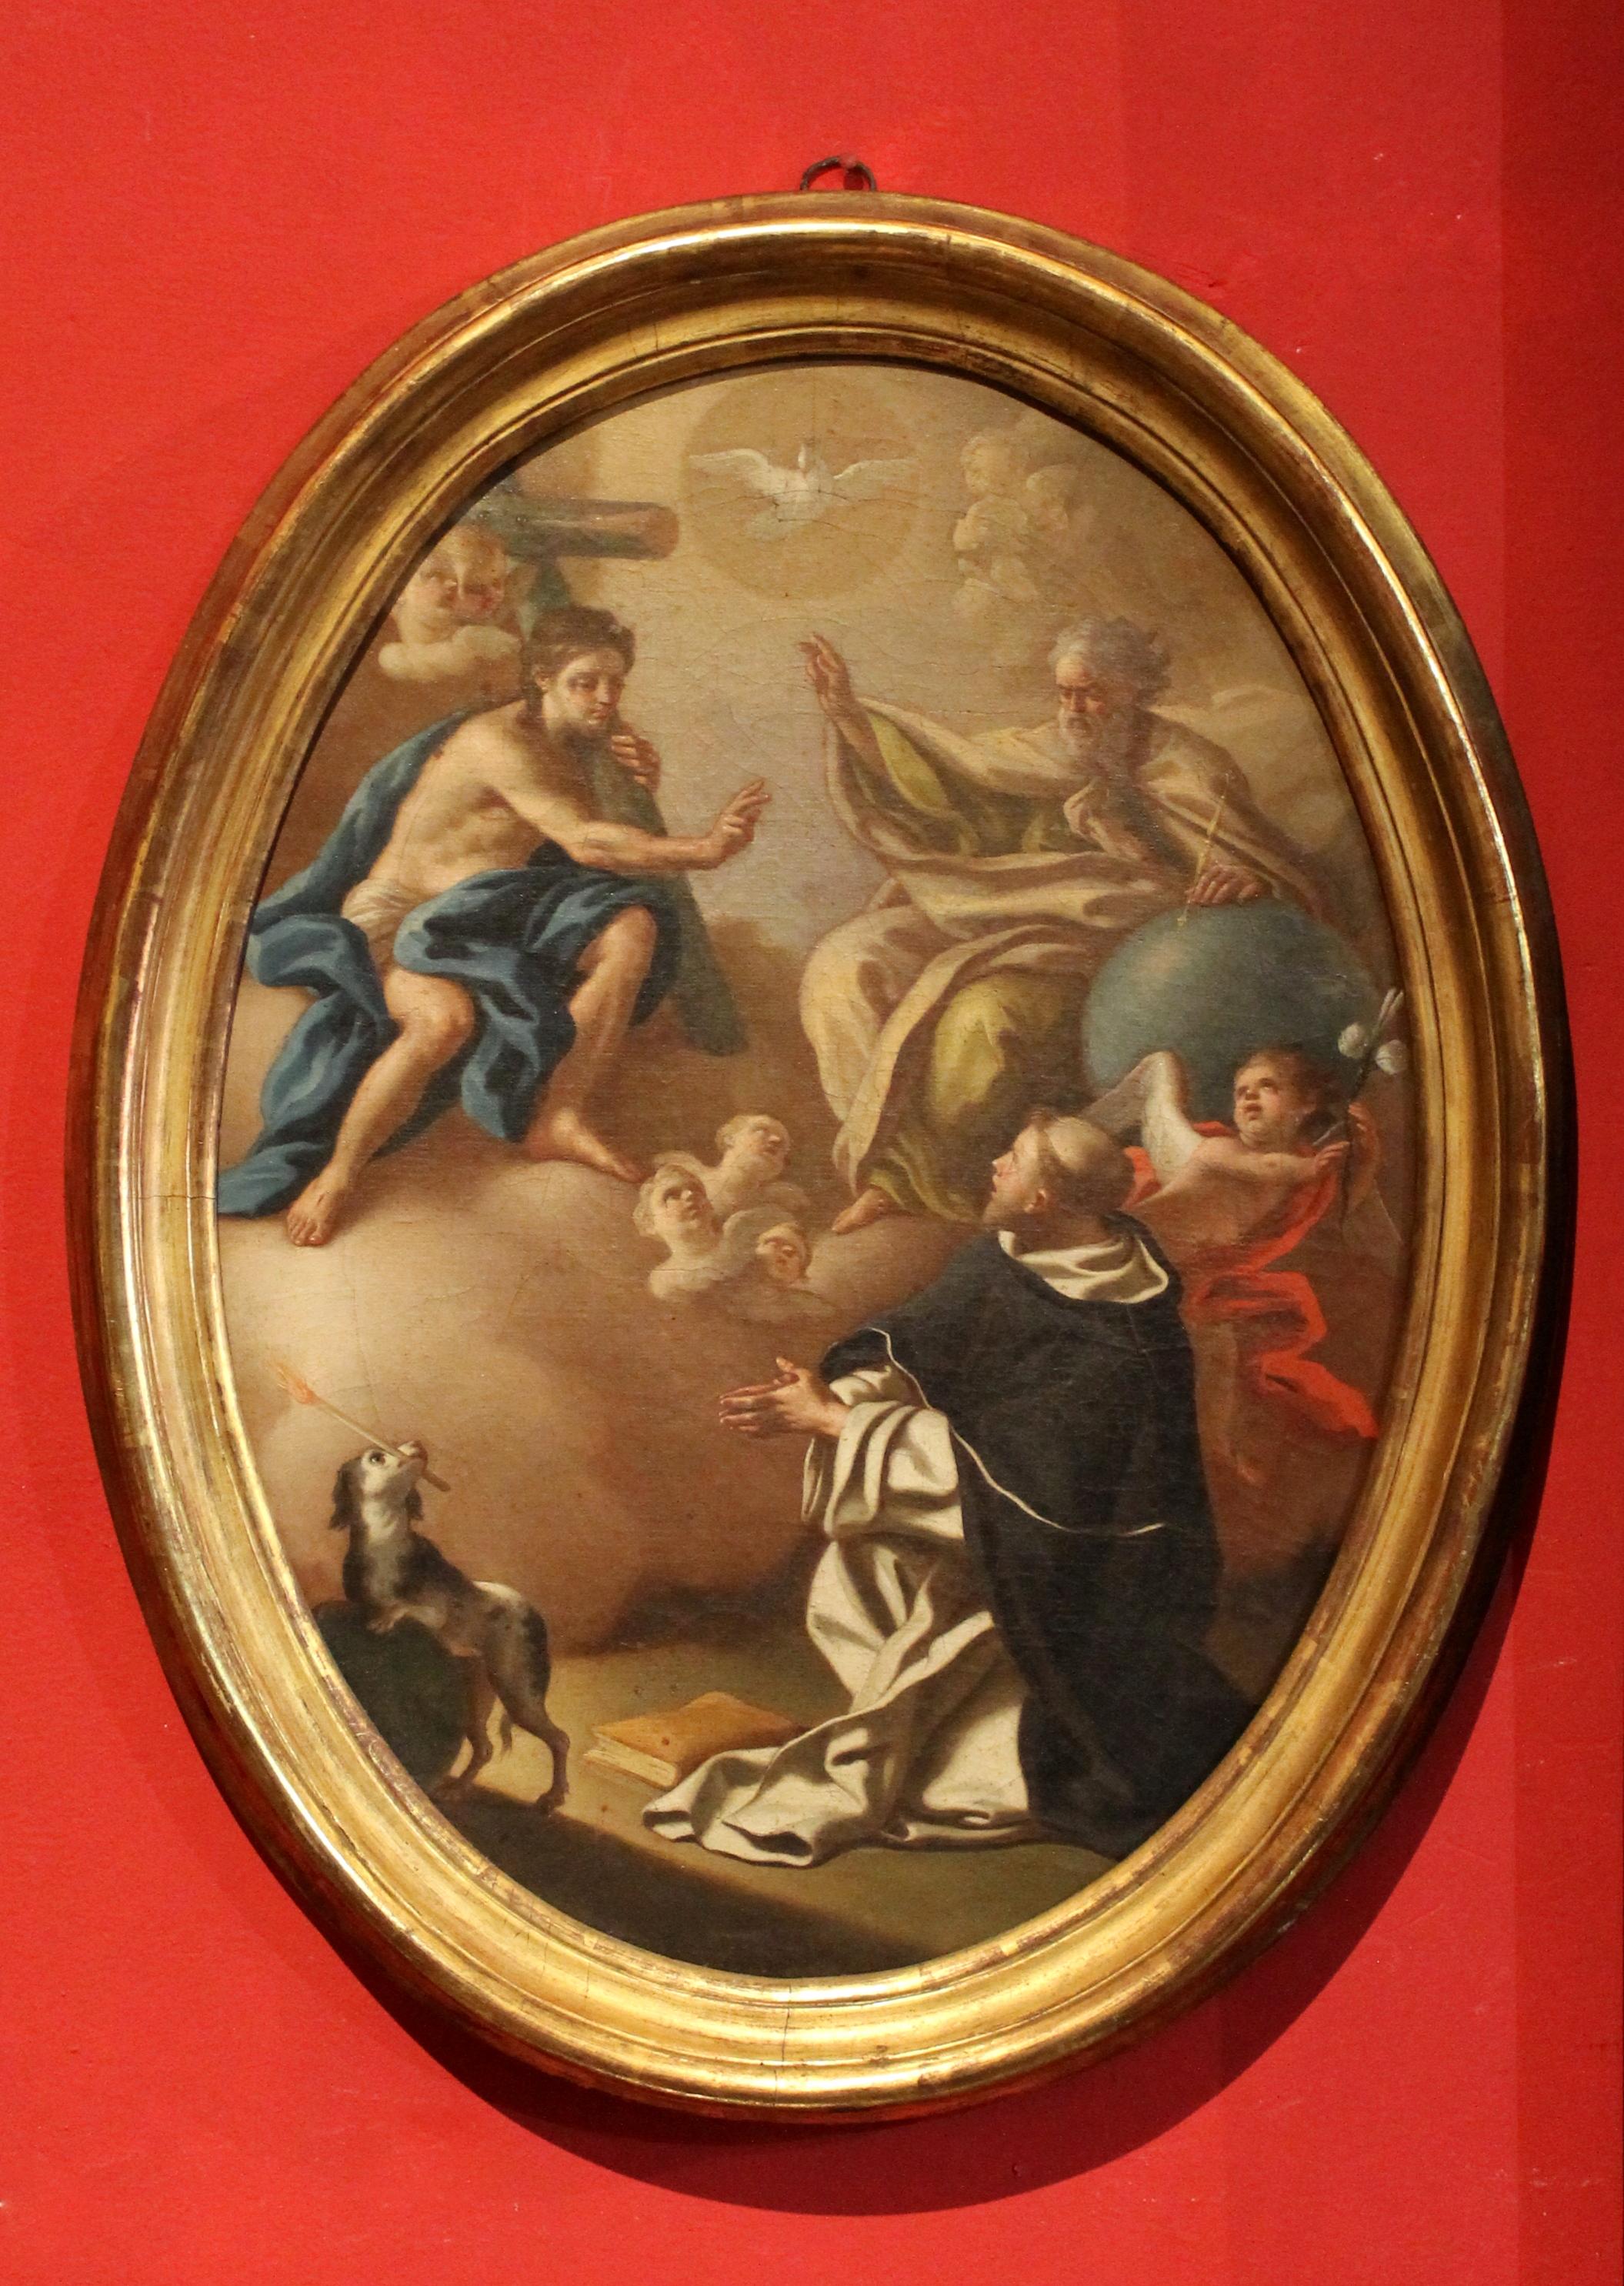 Francesco de Mura Portrait Painting - Italian 18th Century Oval Religious Oil on Canvas Painting with Saint Dominic 